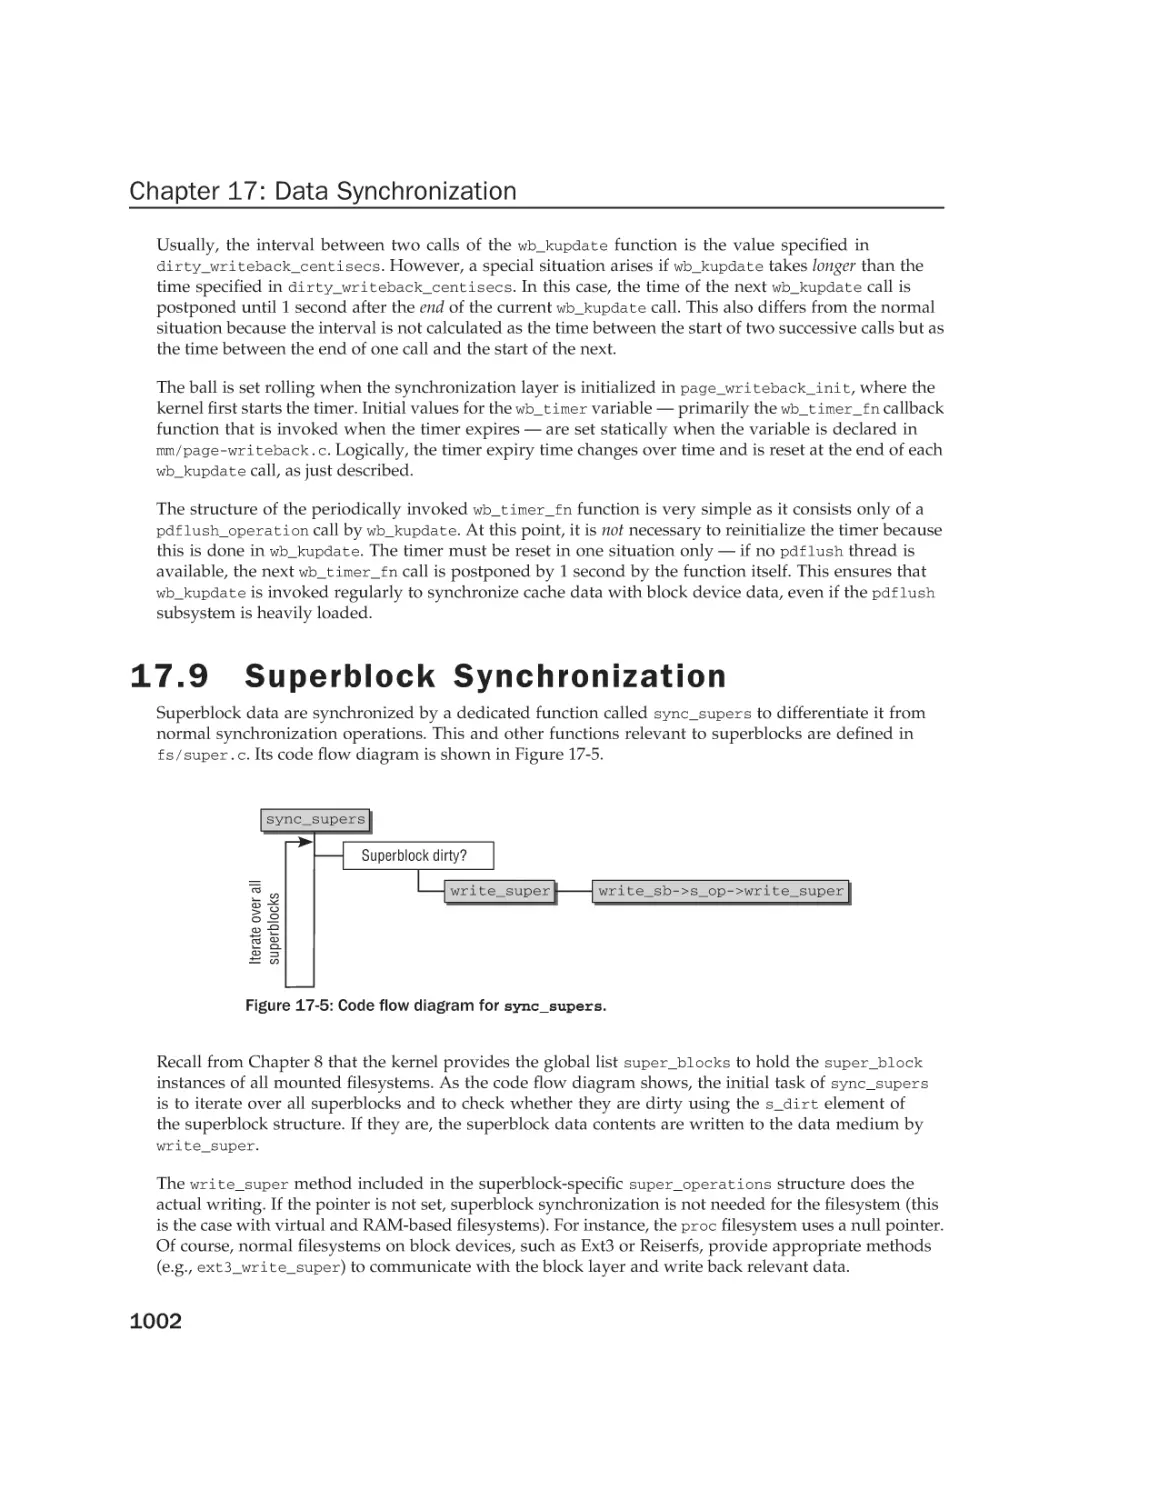 17.9 Superblock Synchronization